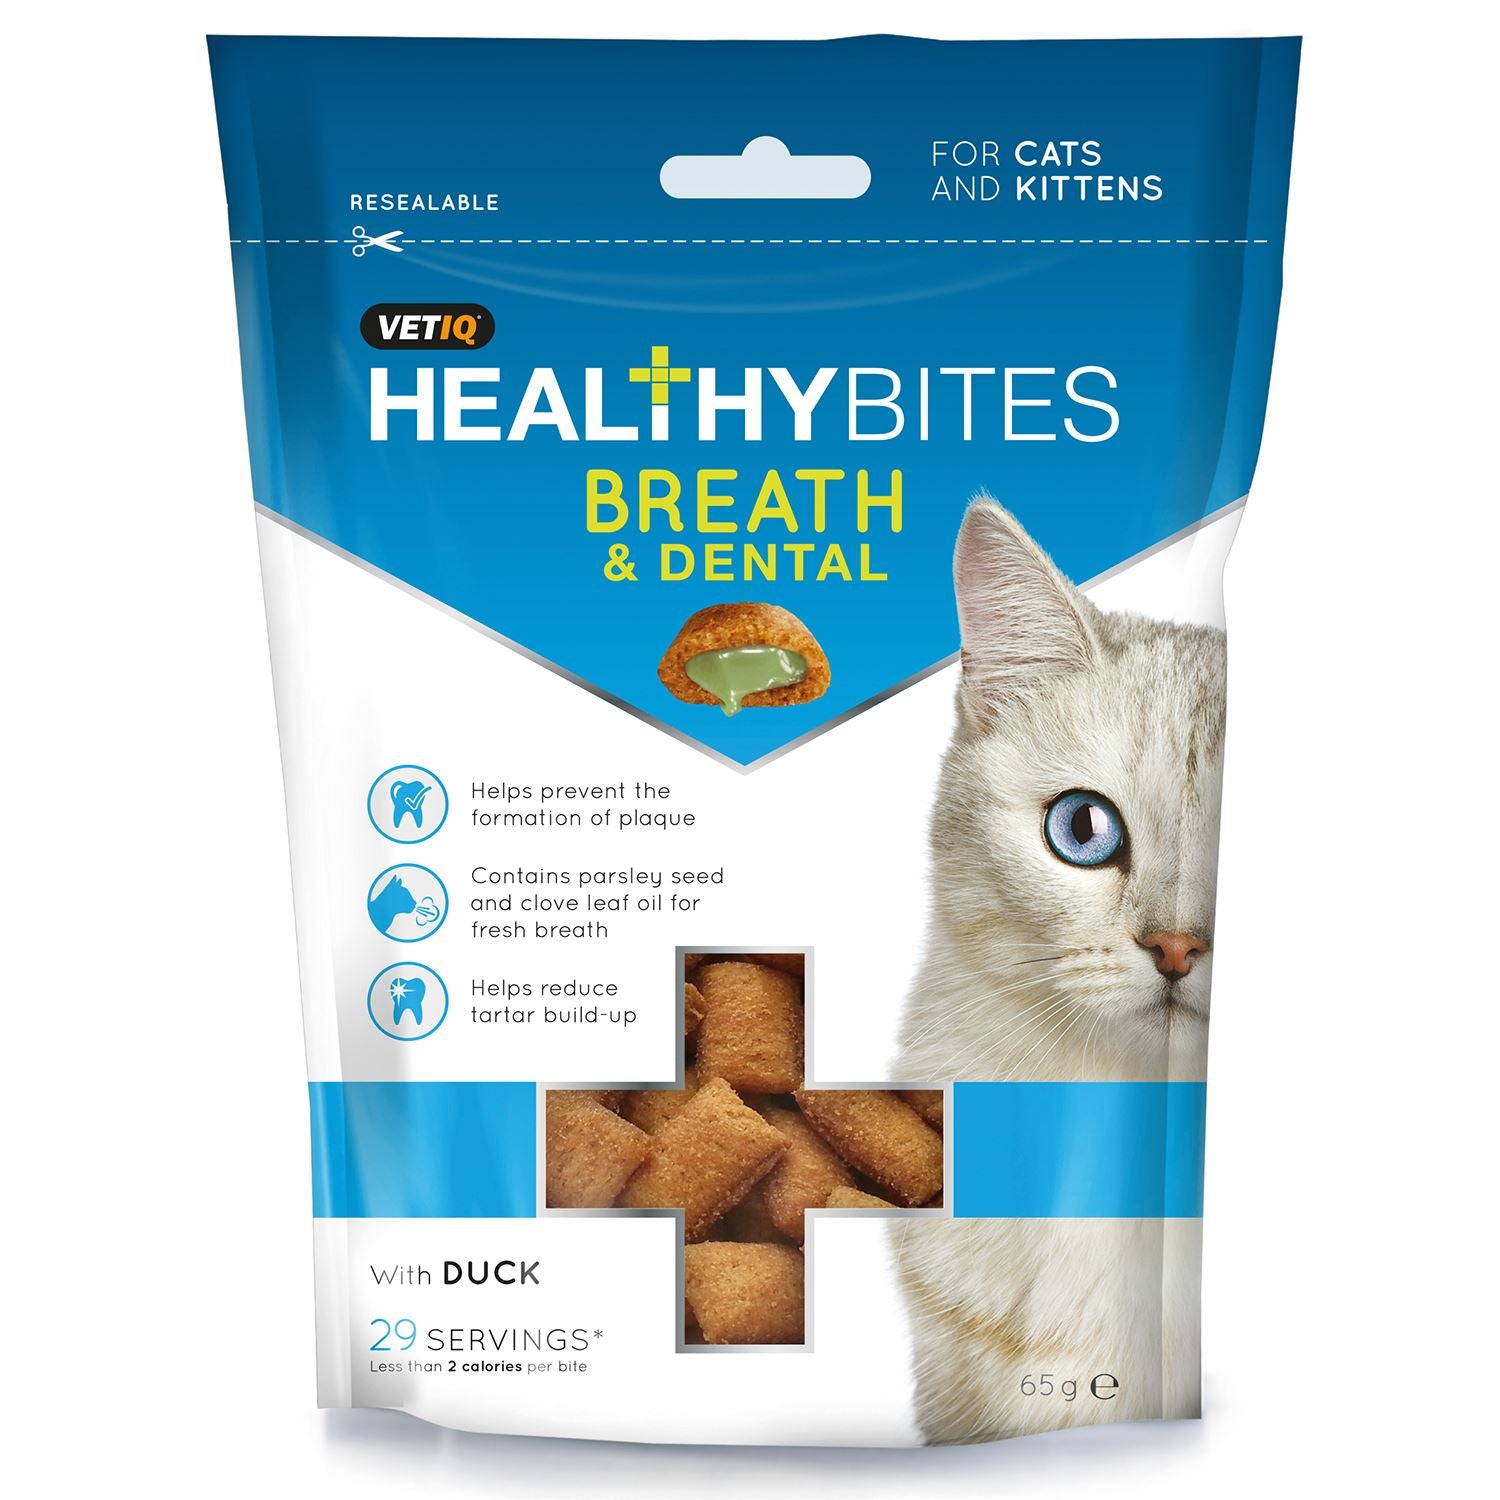 Vetiq Healthy Bites Breath & Dental For Cats & Kittens - Just Horse Riders